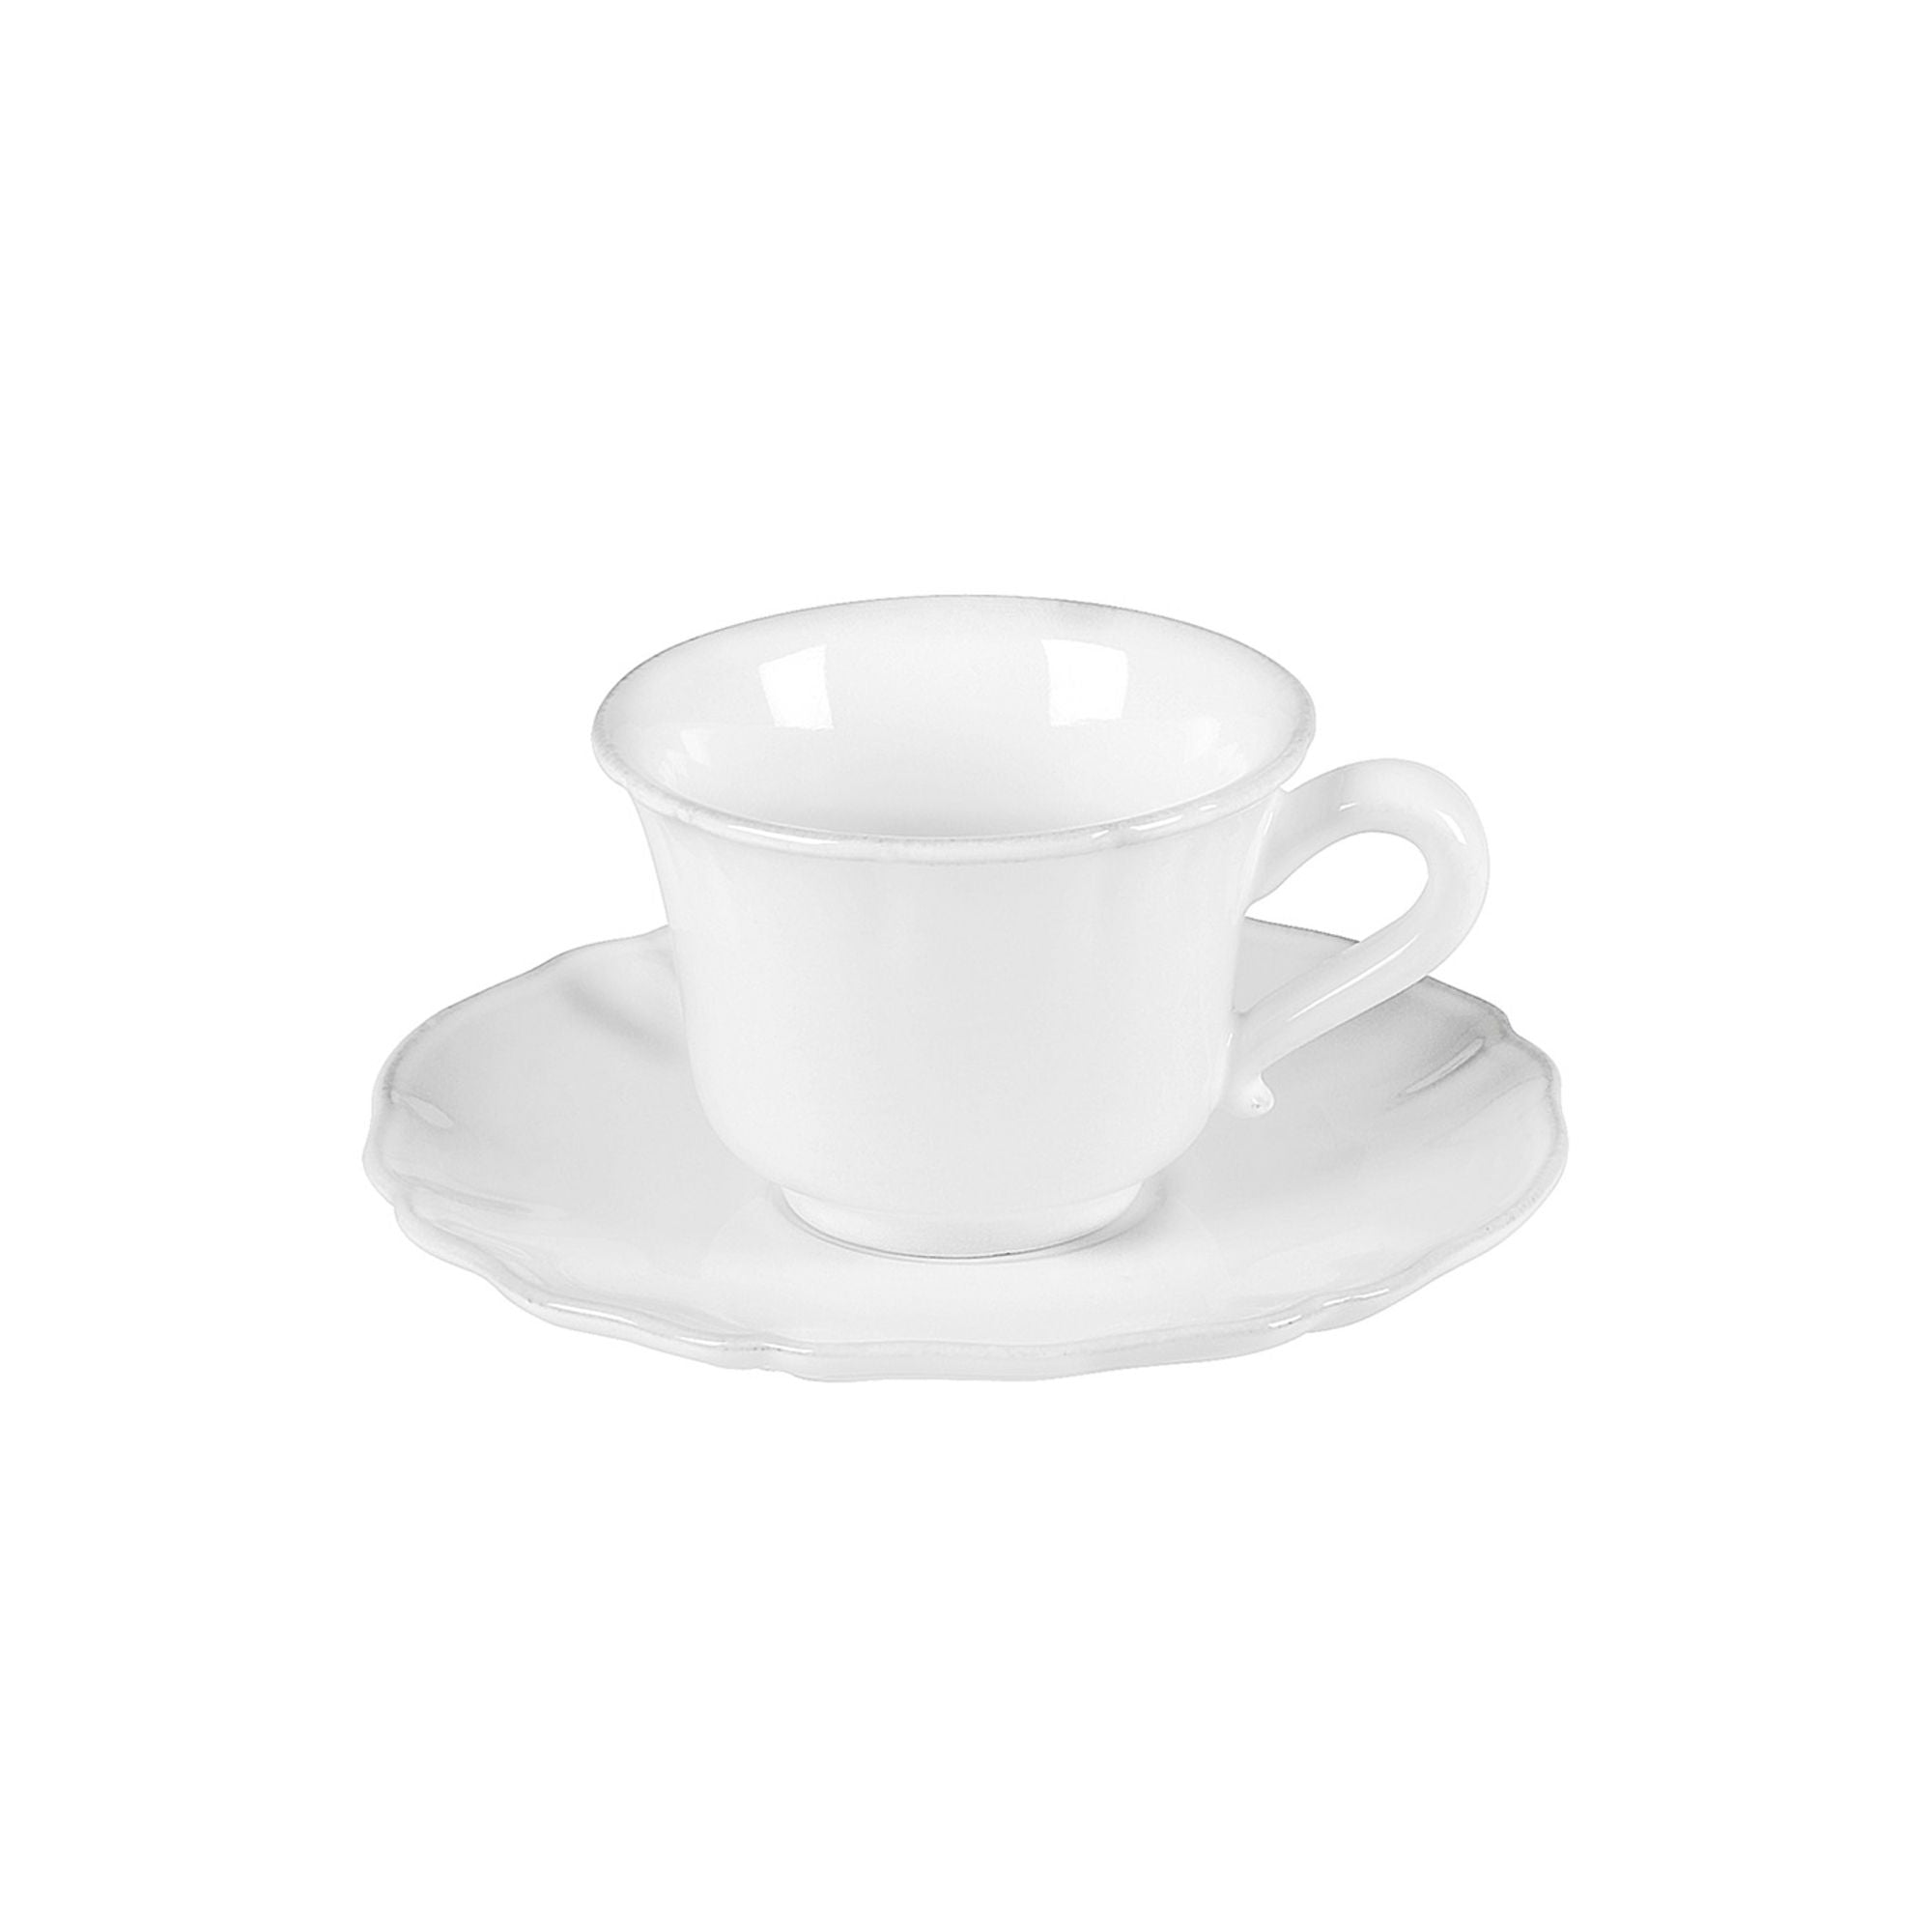 Alentejo Tea Cup and Saucer 7 oz. White